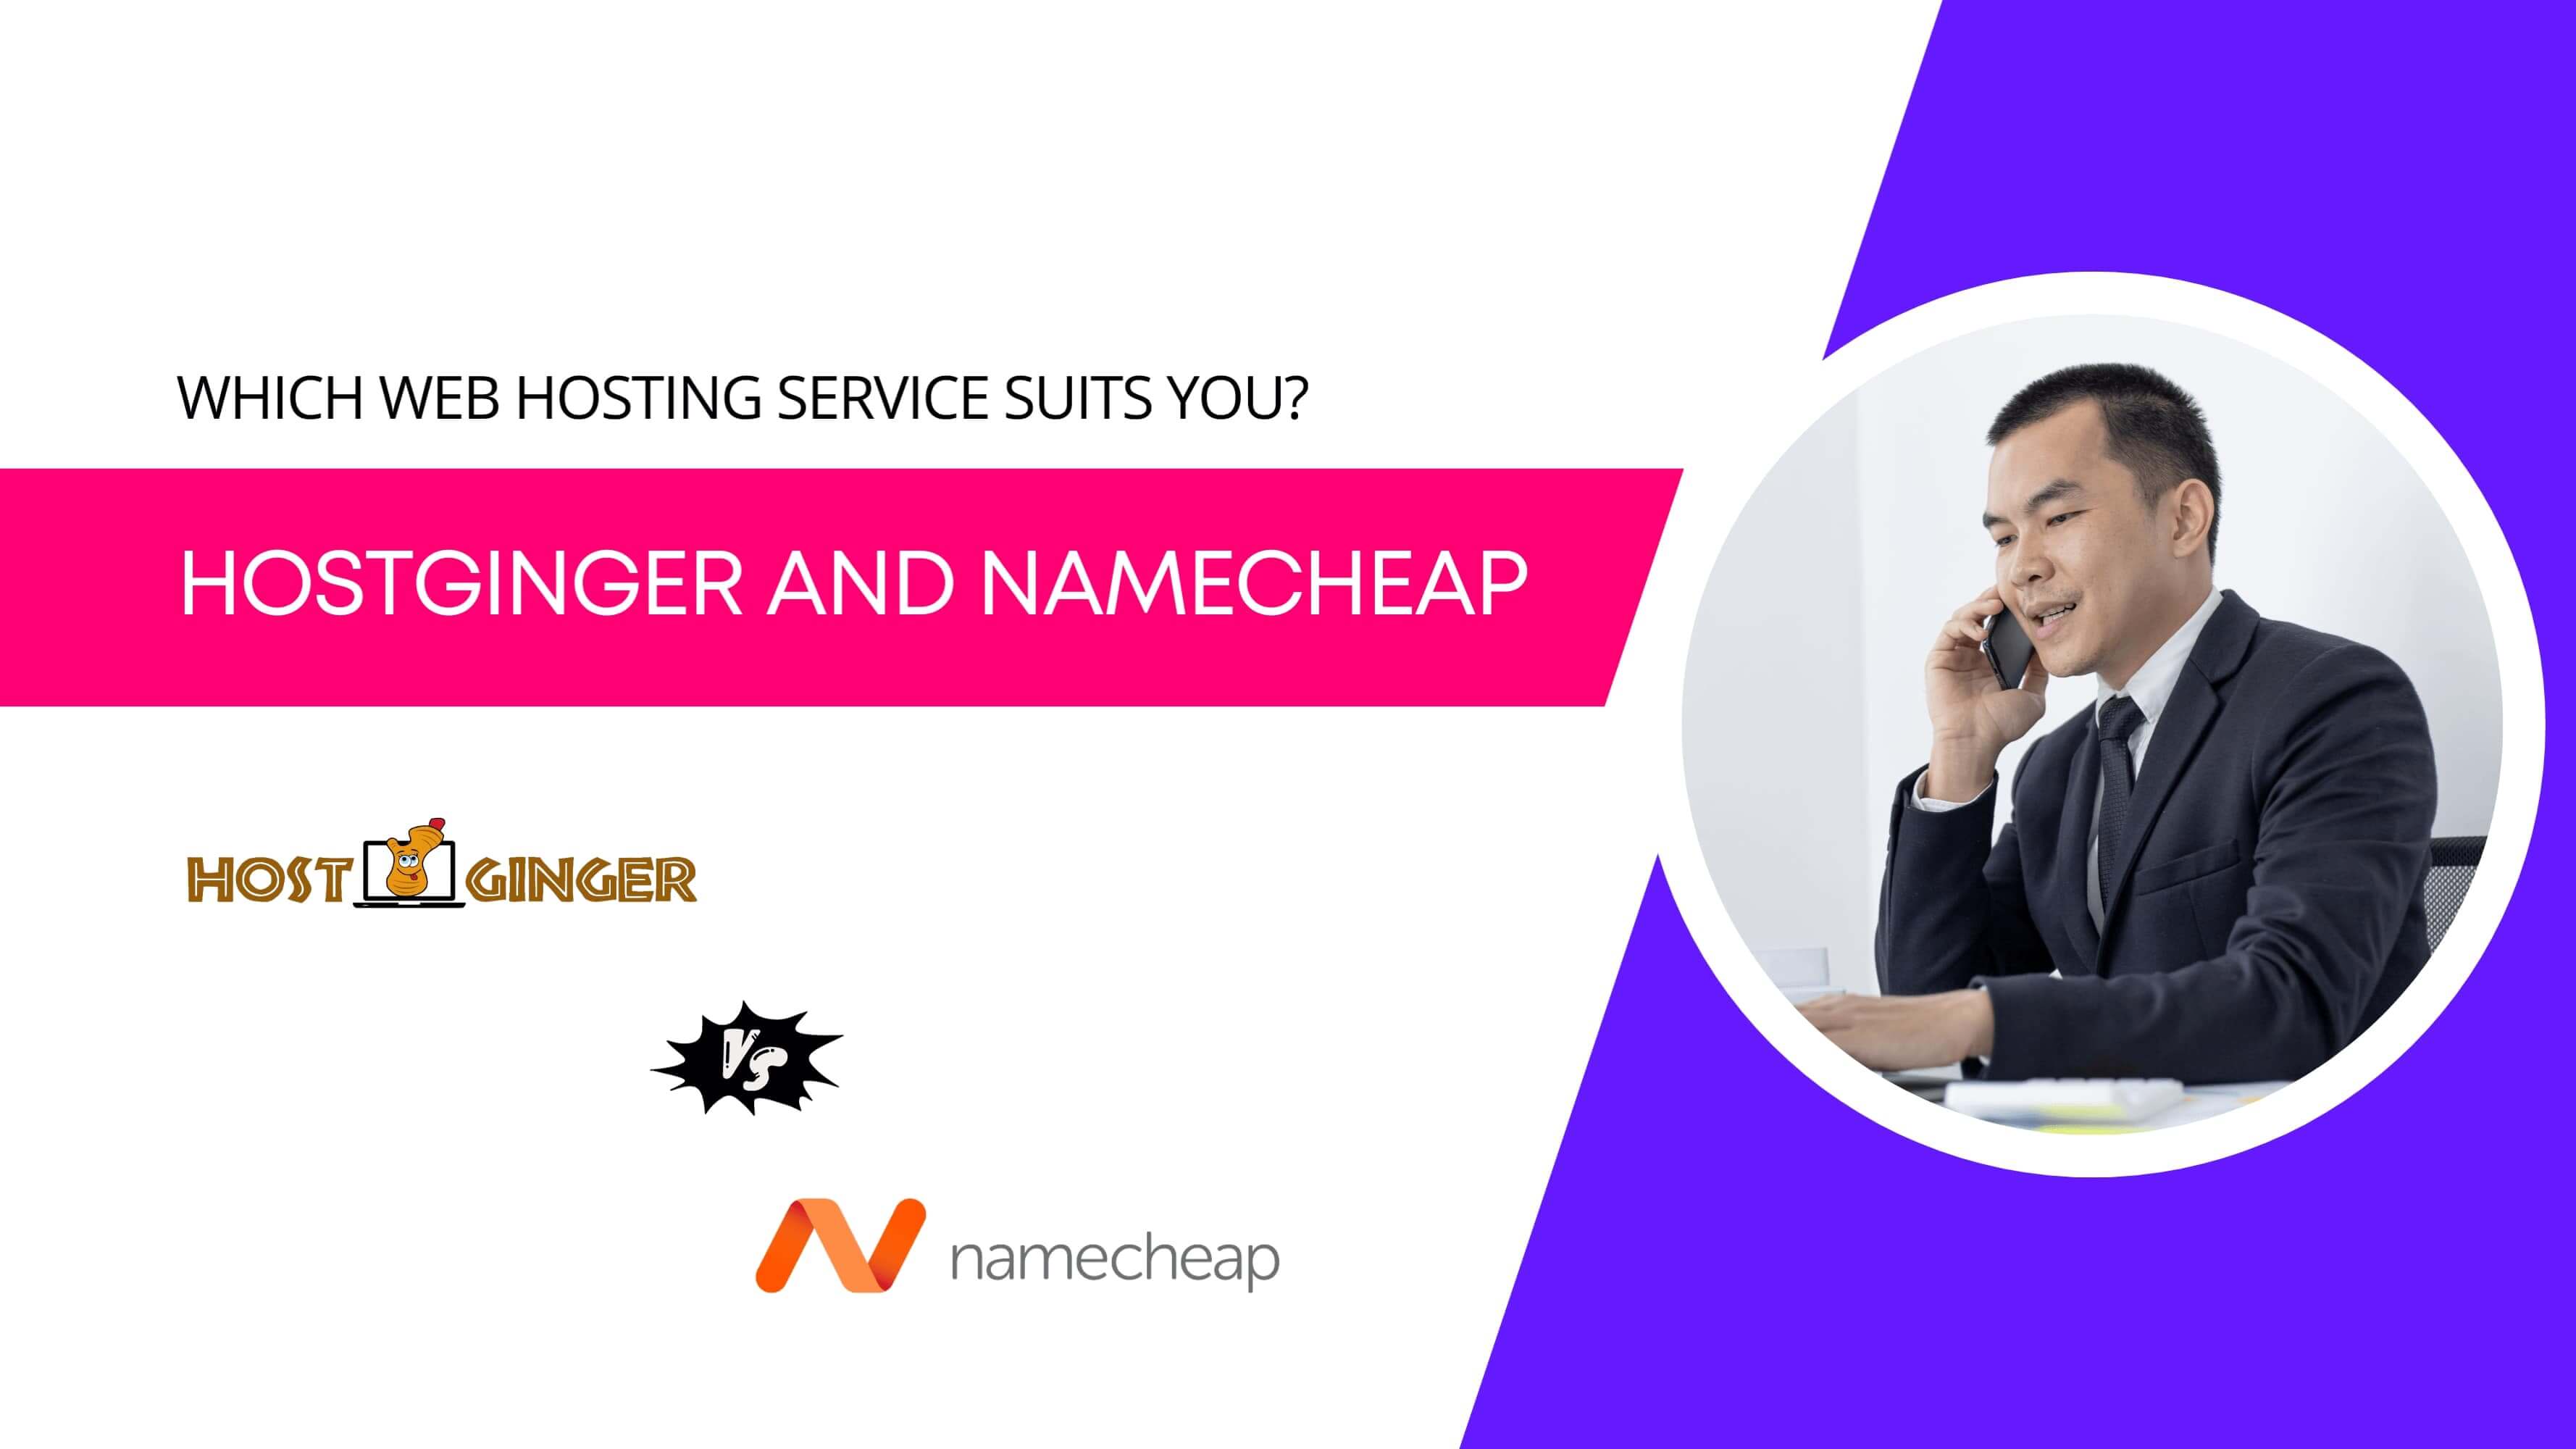 Comparing Hostginger and Namecheap